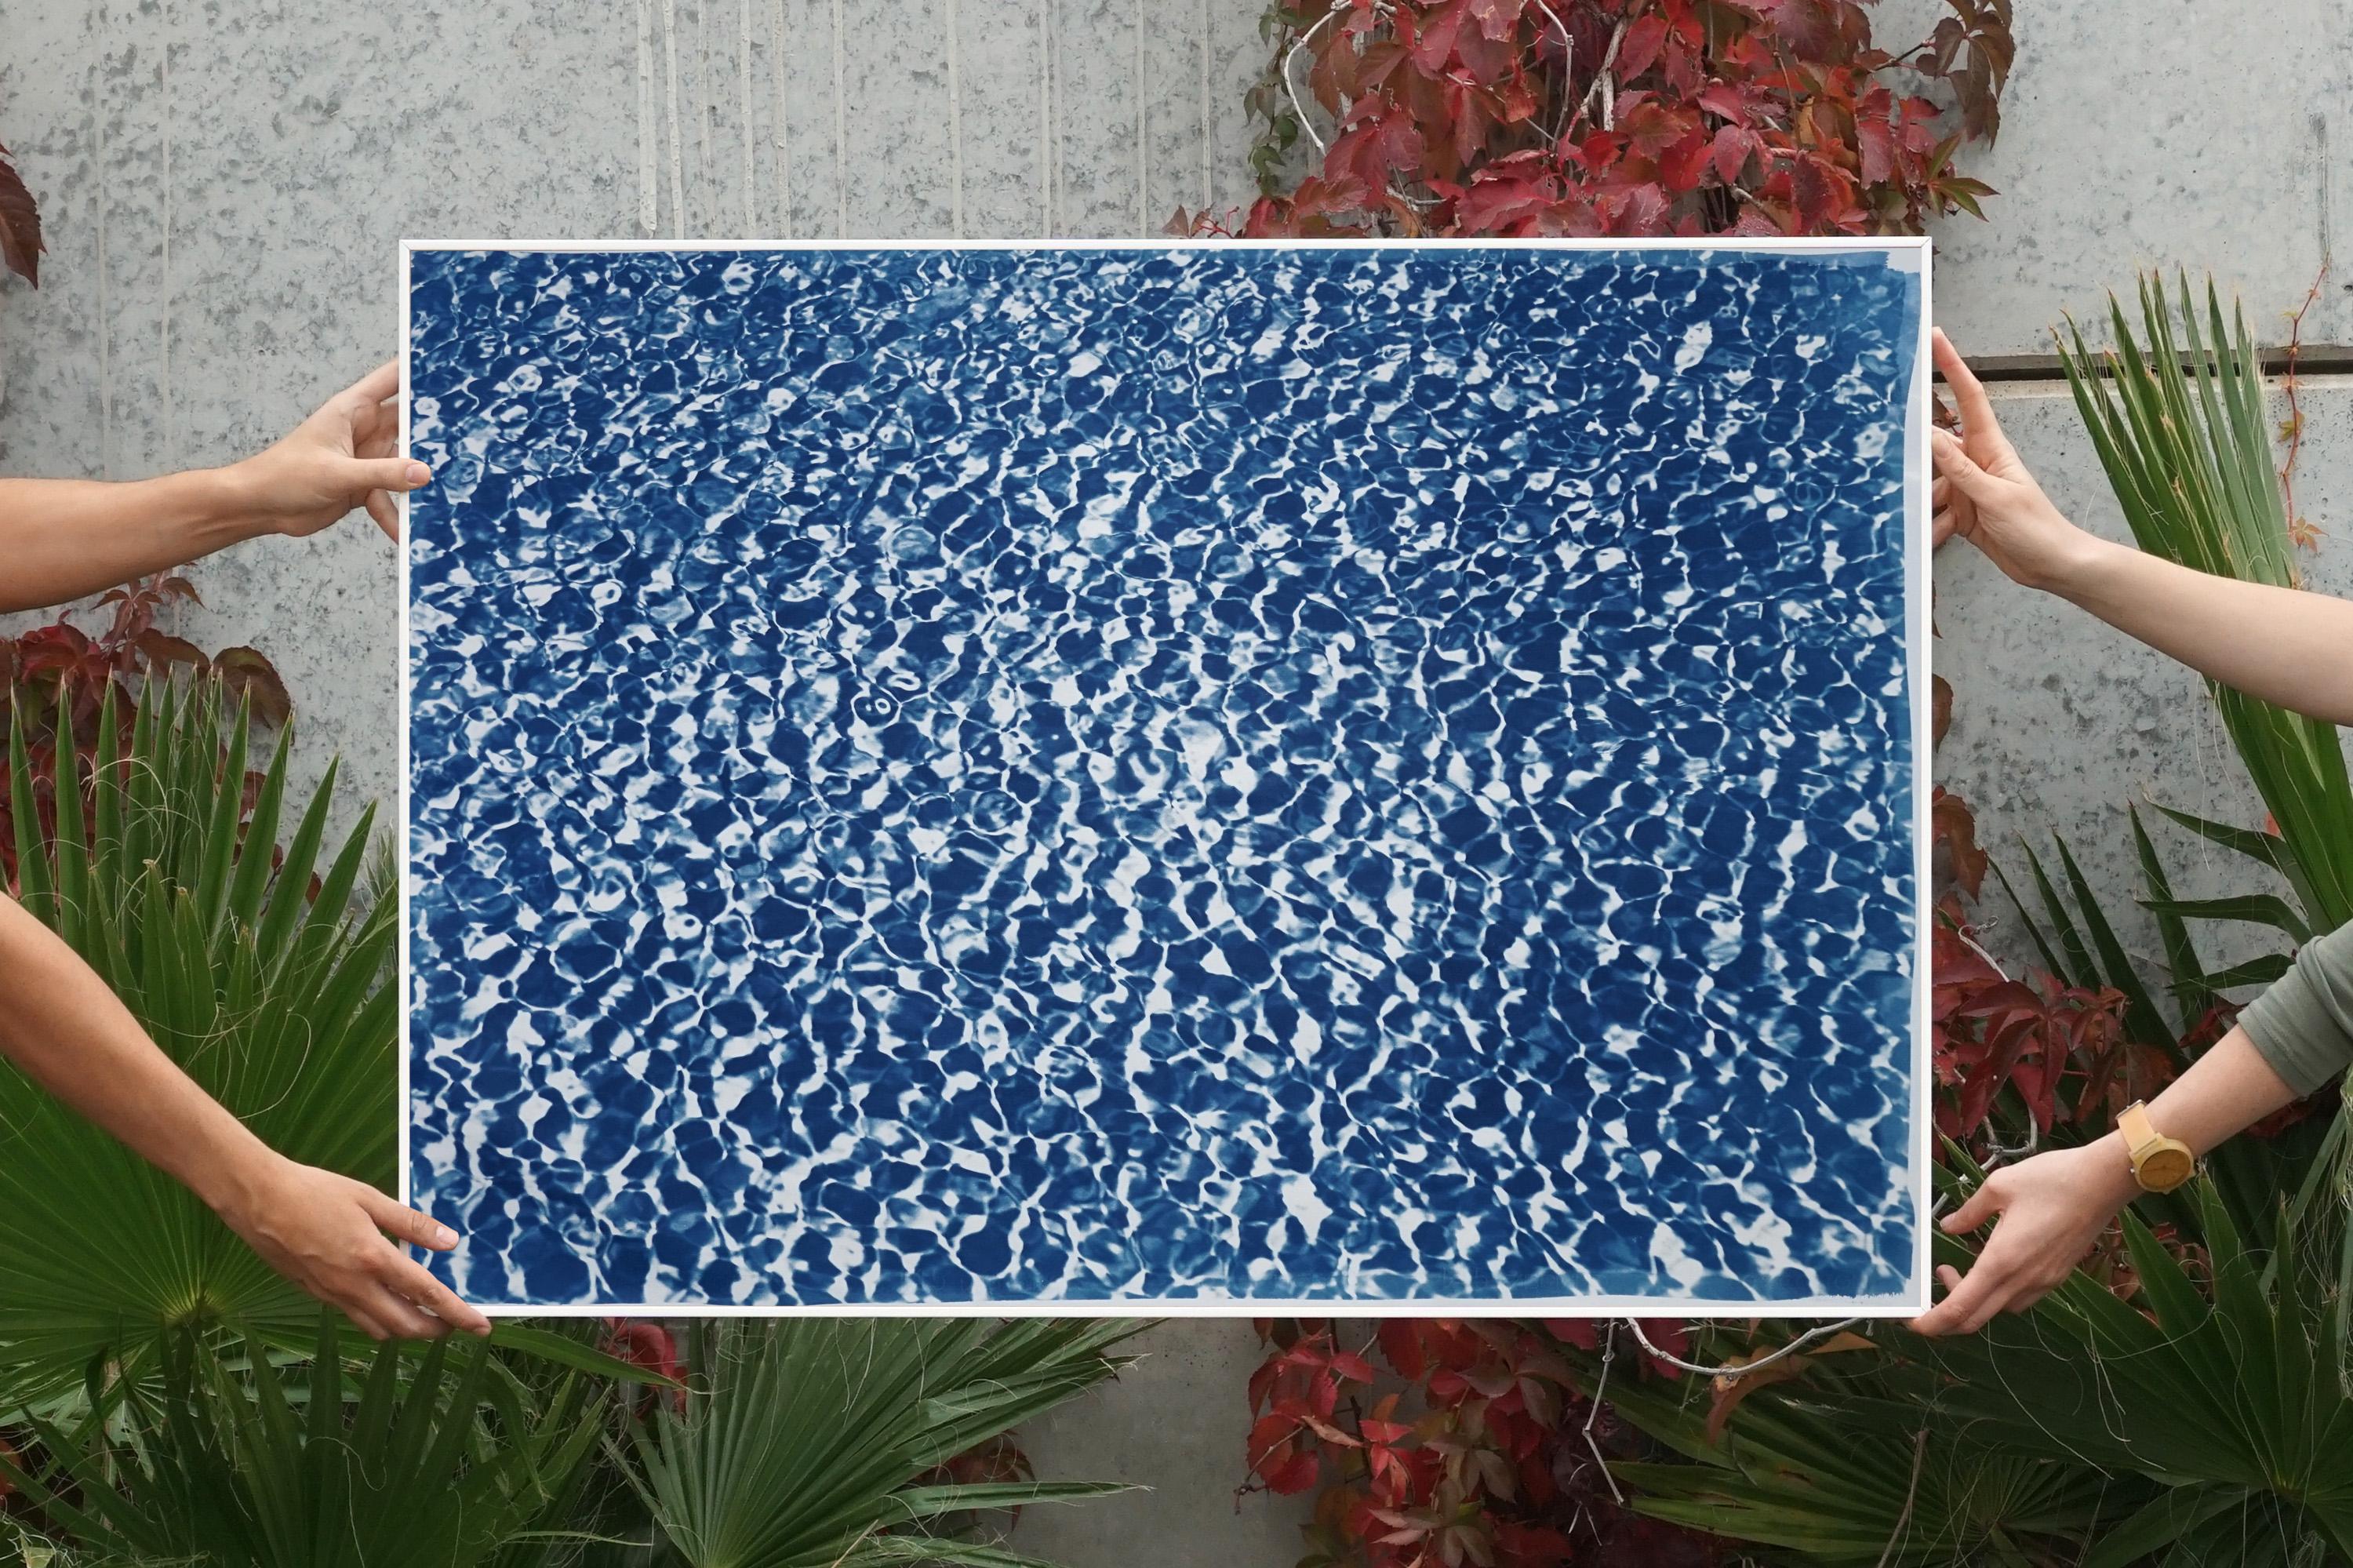 Infinity Pool Water Reflections, Blue & White Pattern, Handmade Cyanotype Print 5